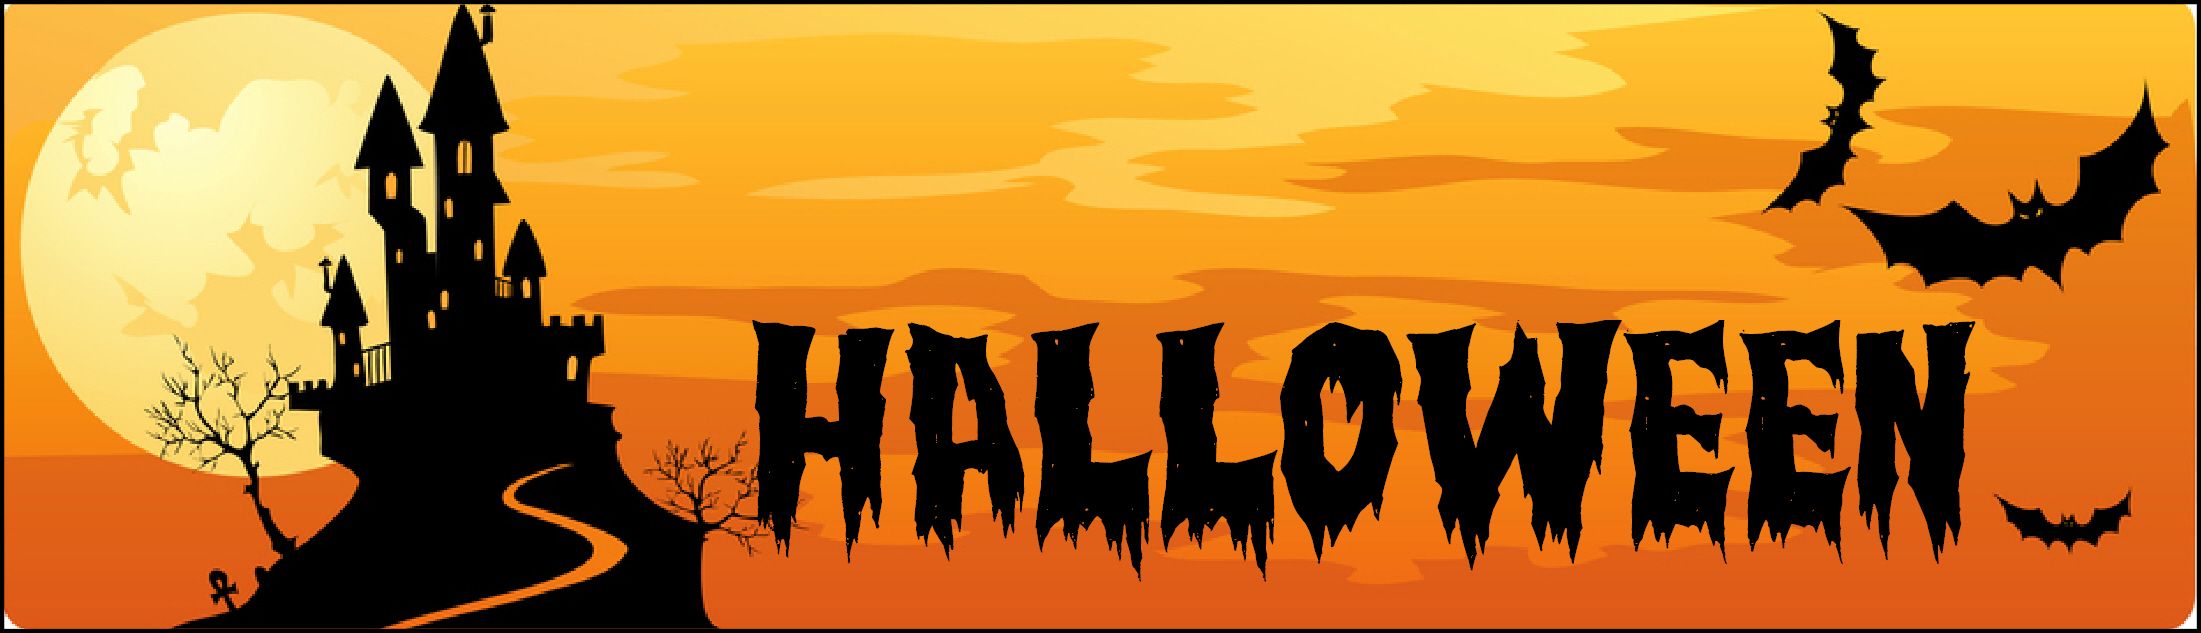 Halloween Wishes Banner